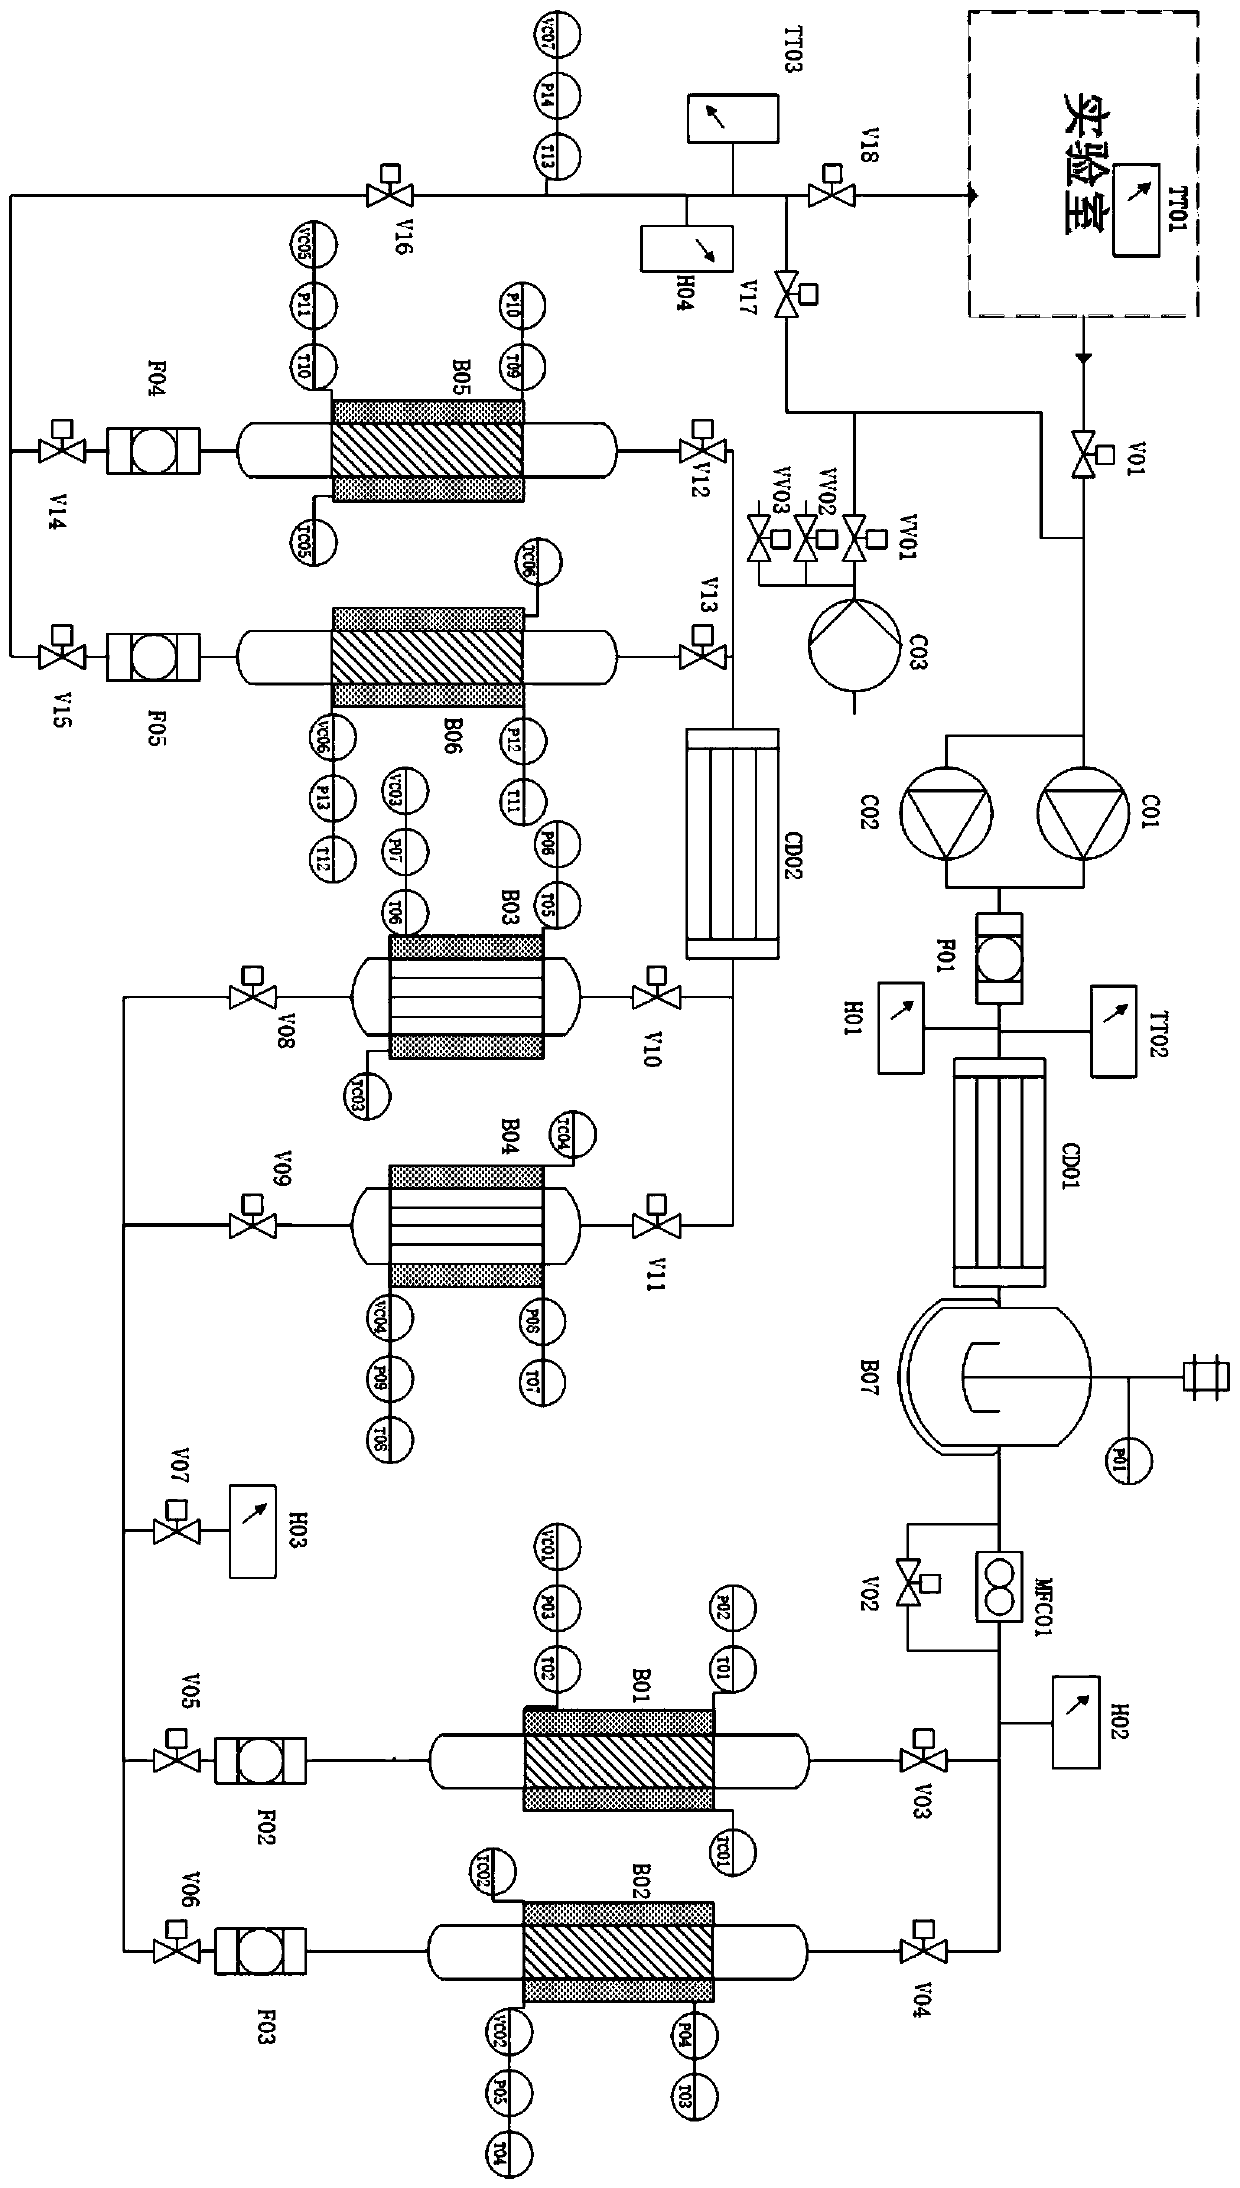 Laboratory air tritium removal system